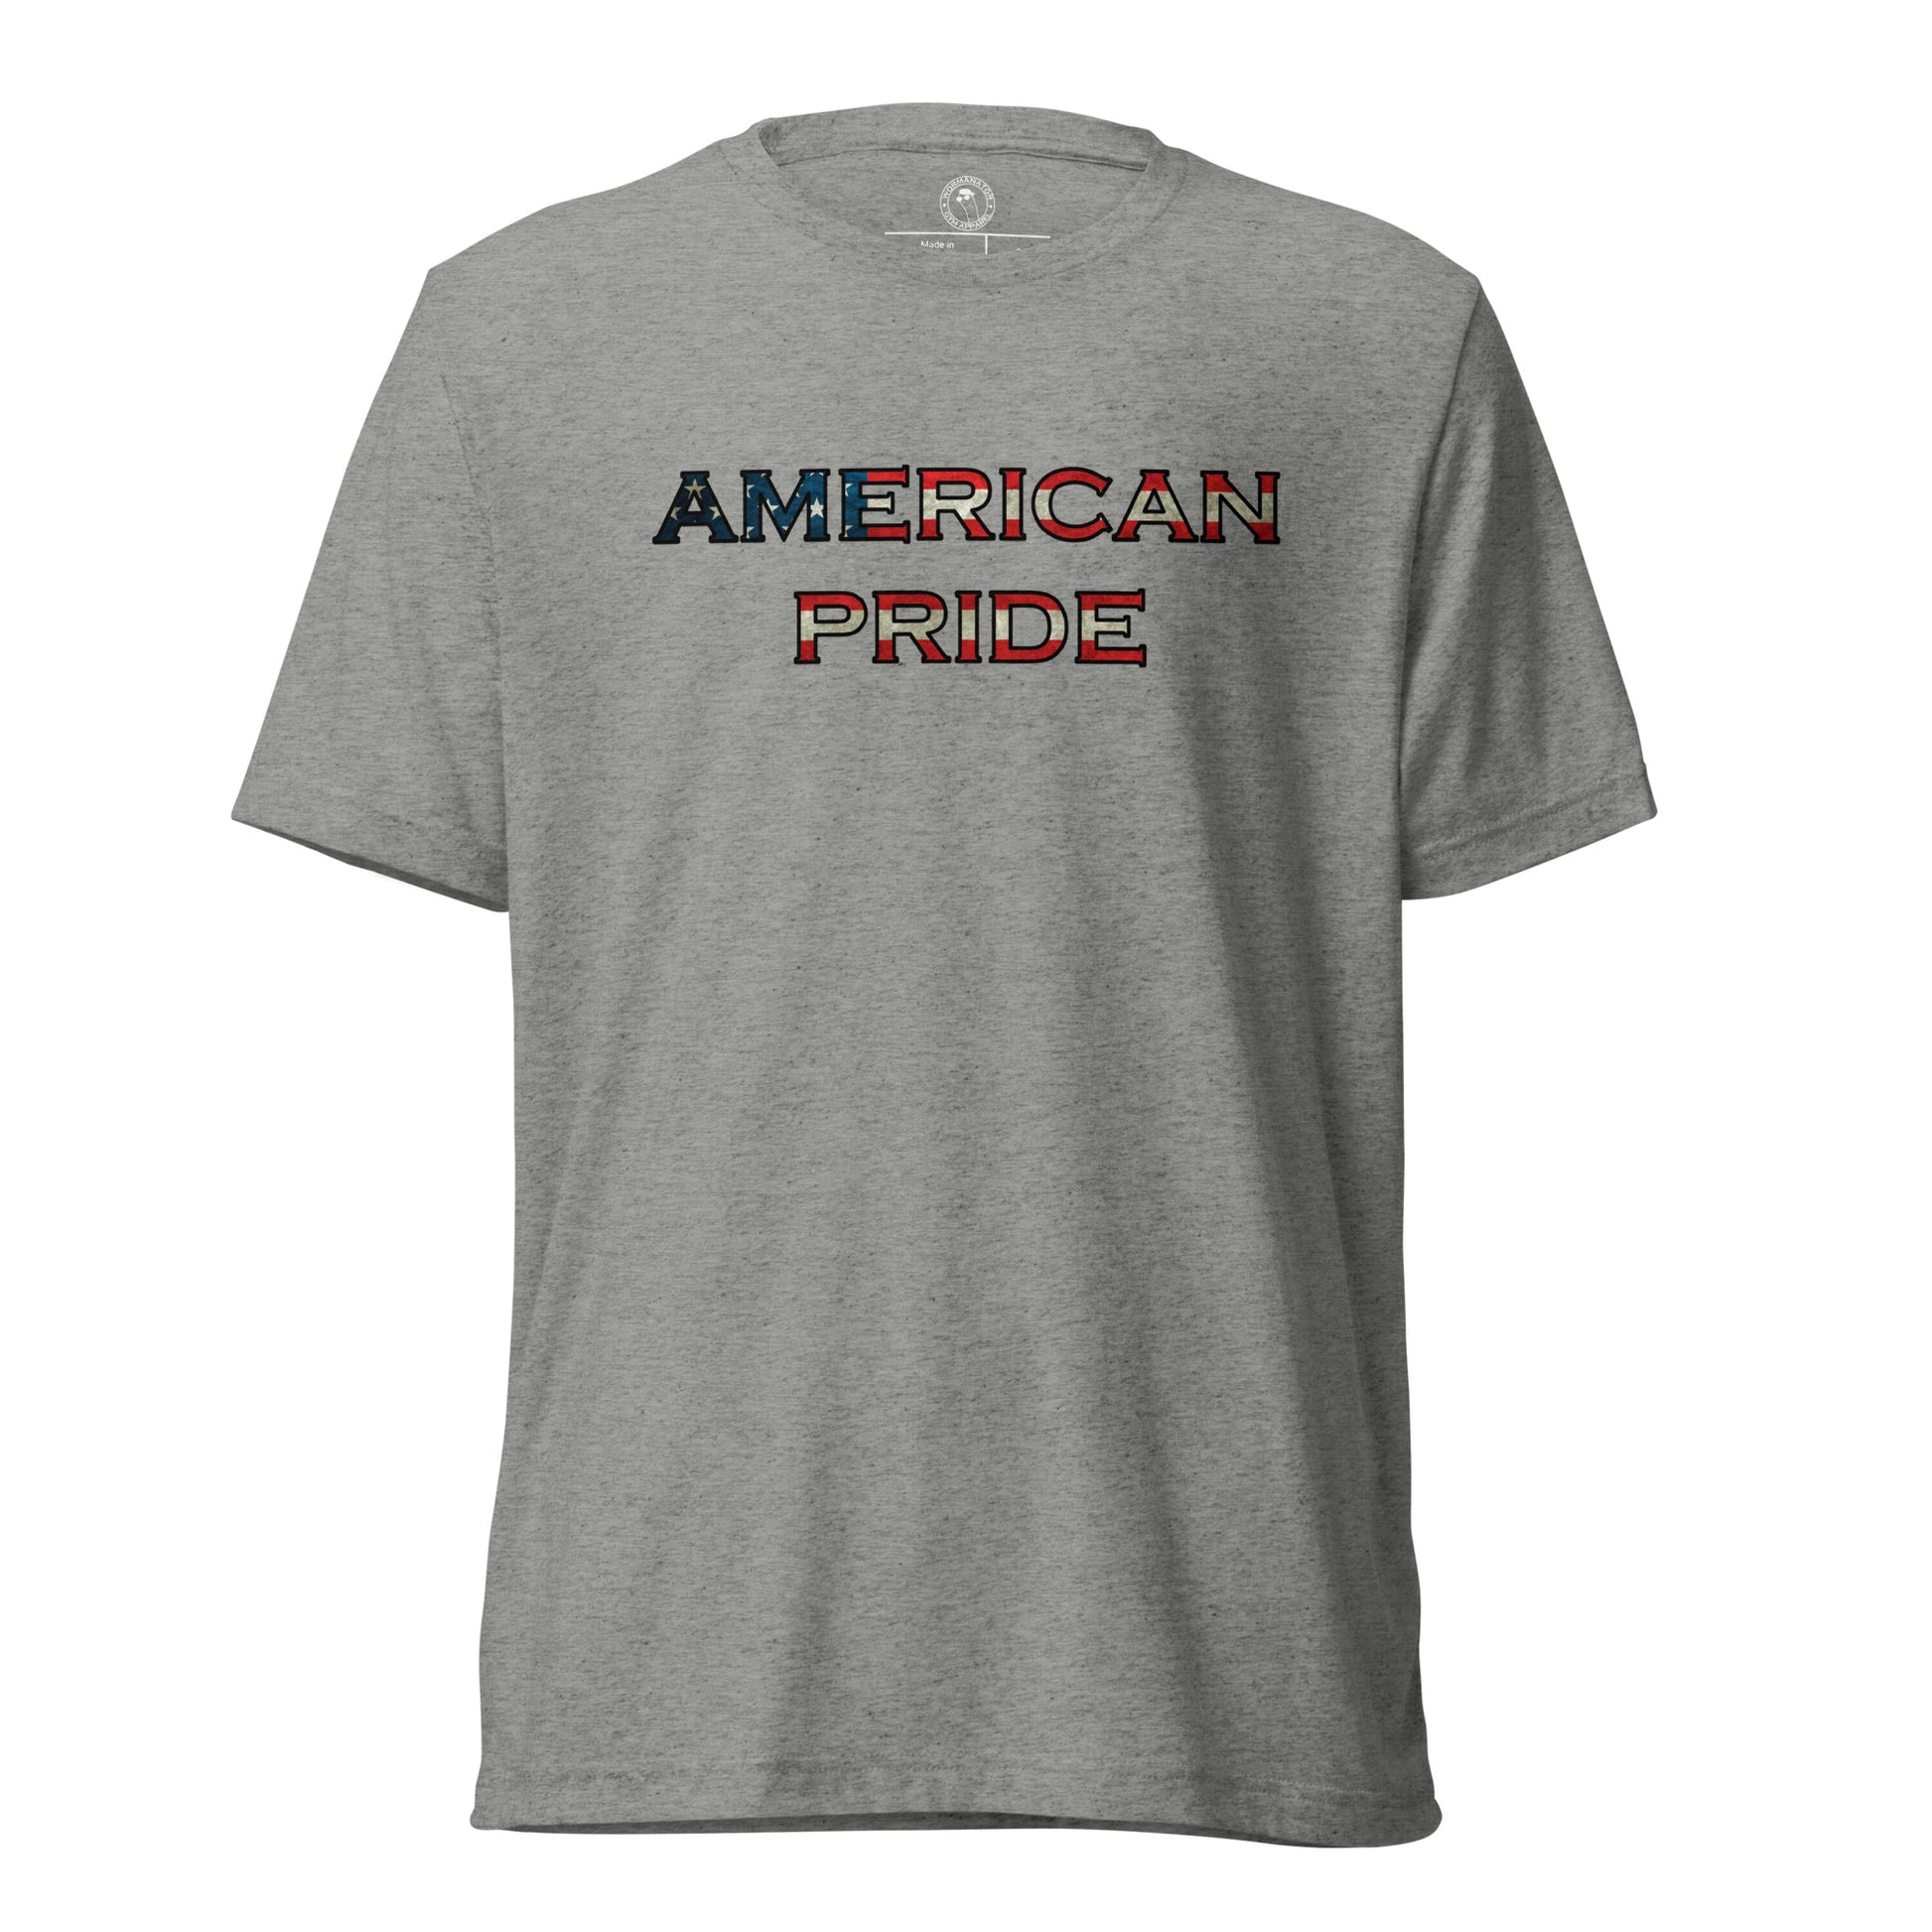 American Pride T-Shirt in Athletic Grey Triblend